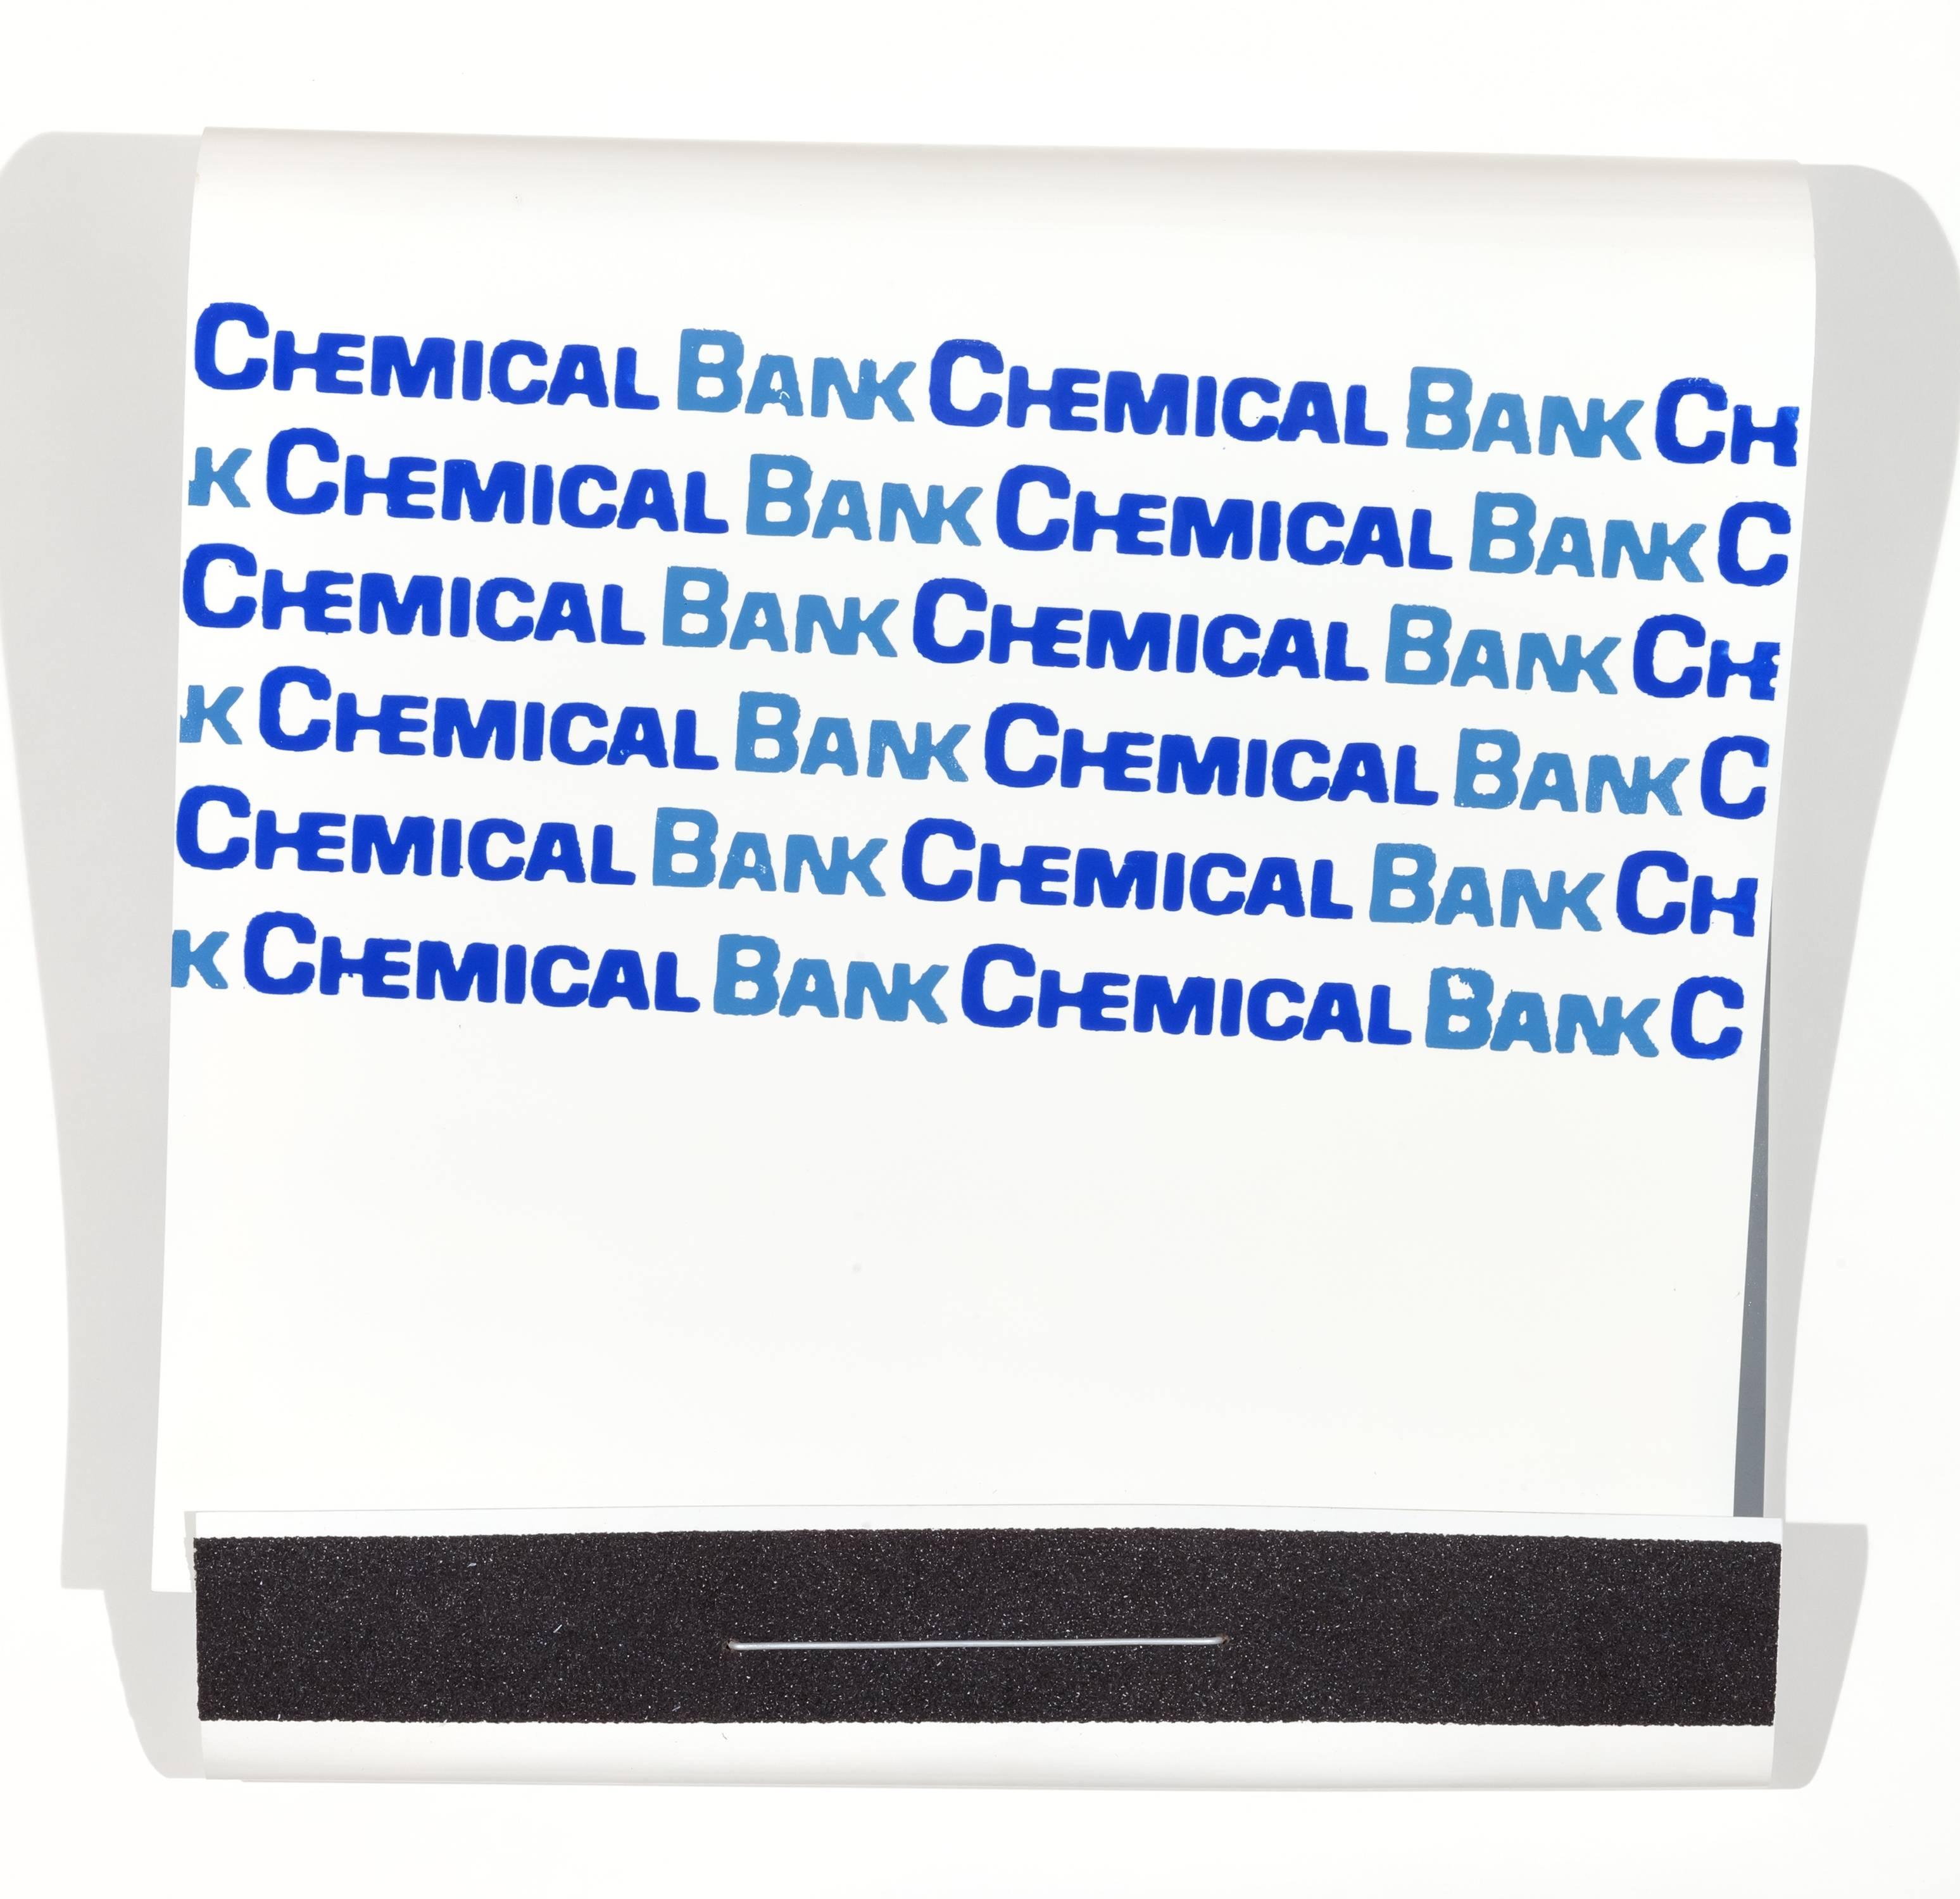 Chemical Bank - Mixed Media Art by Skylar Fein